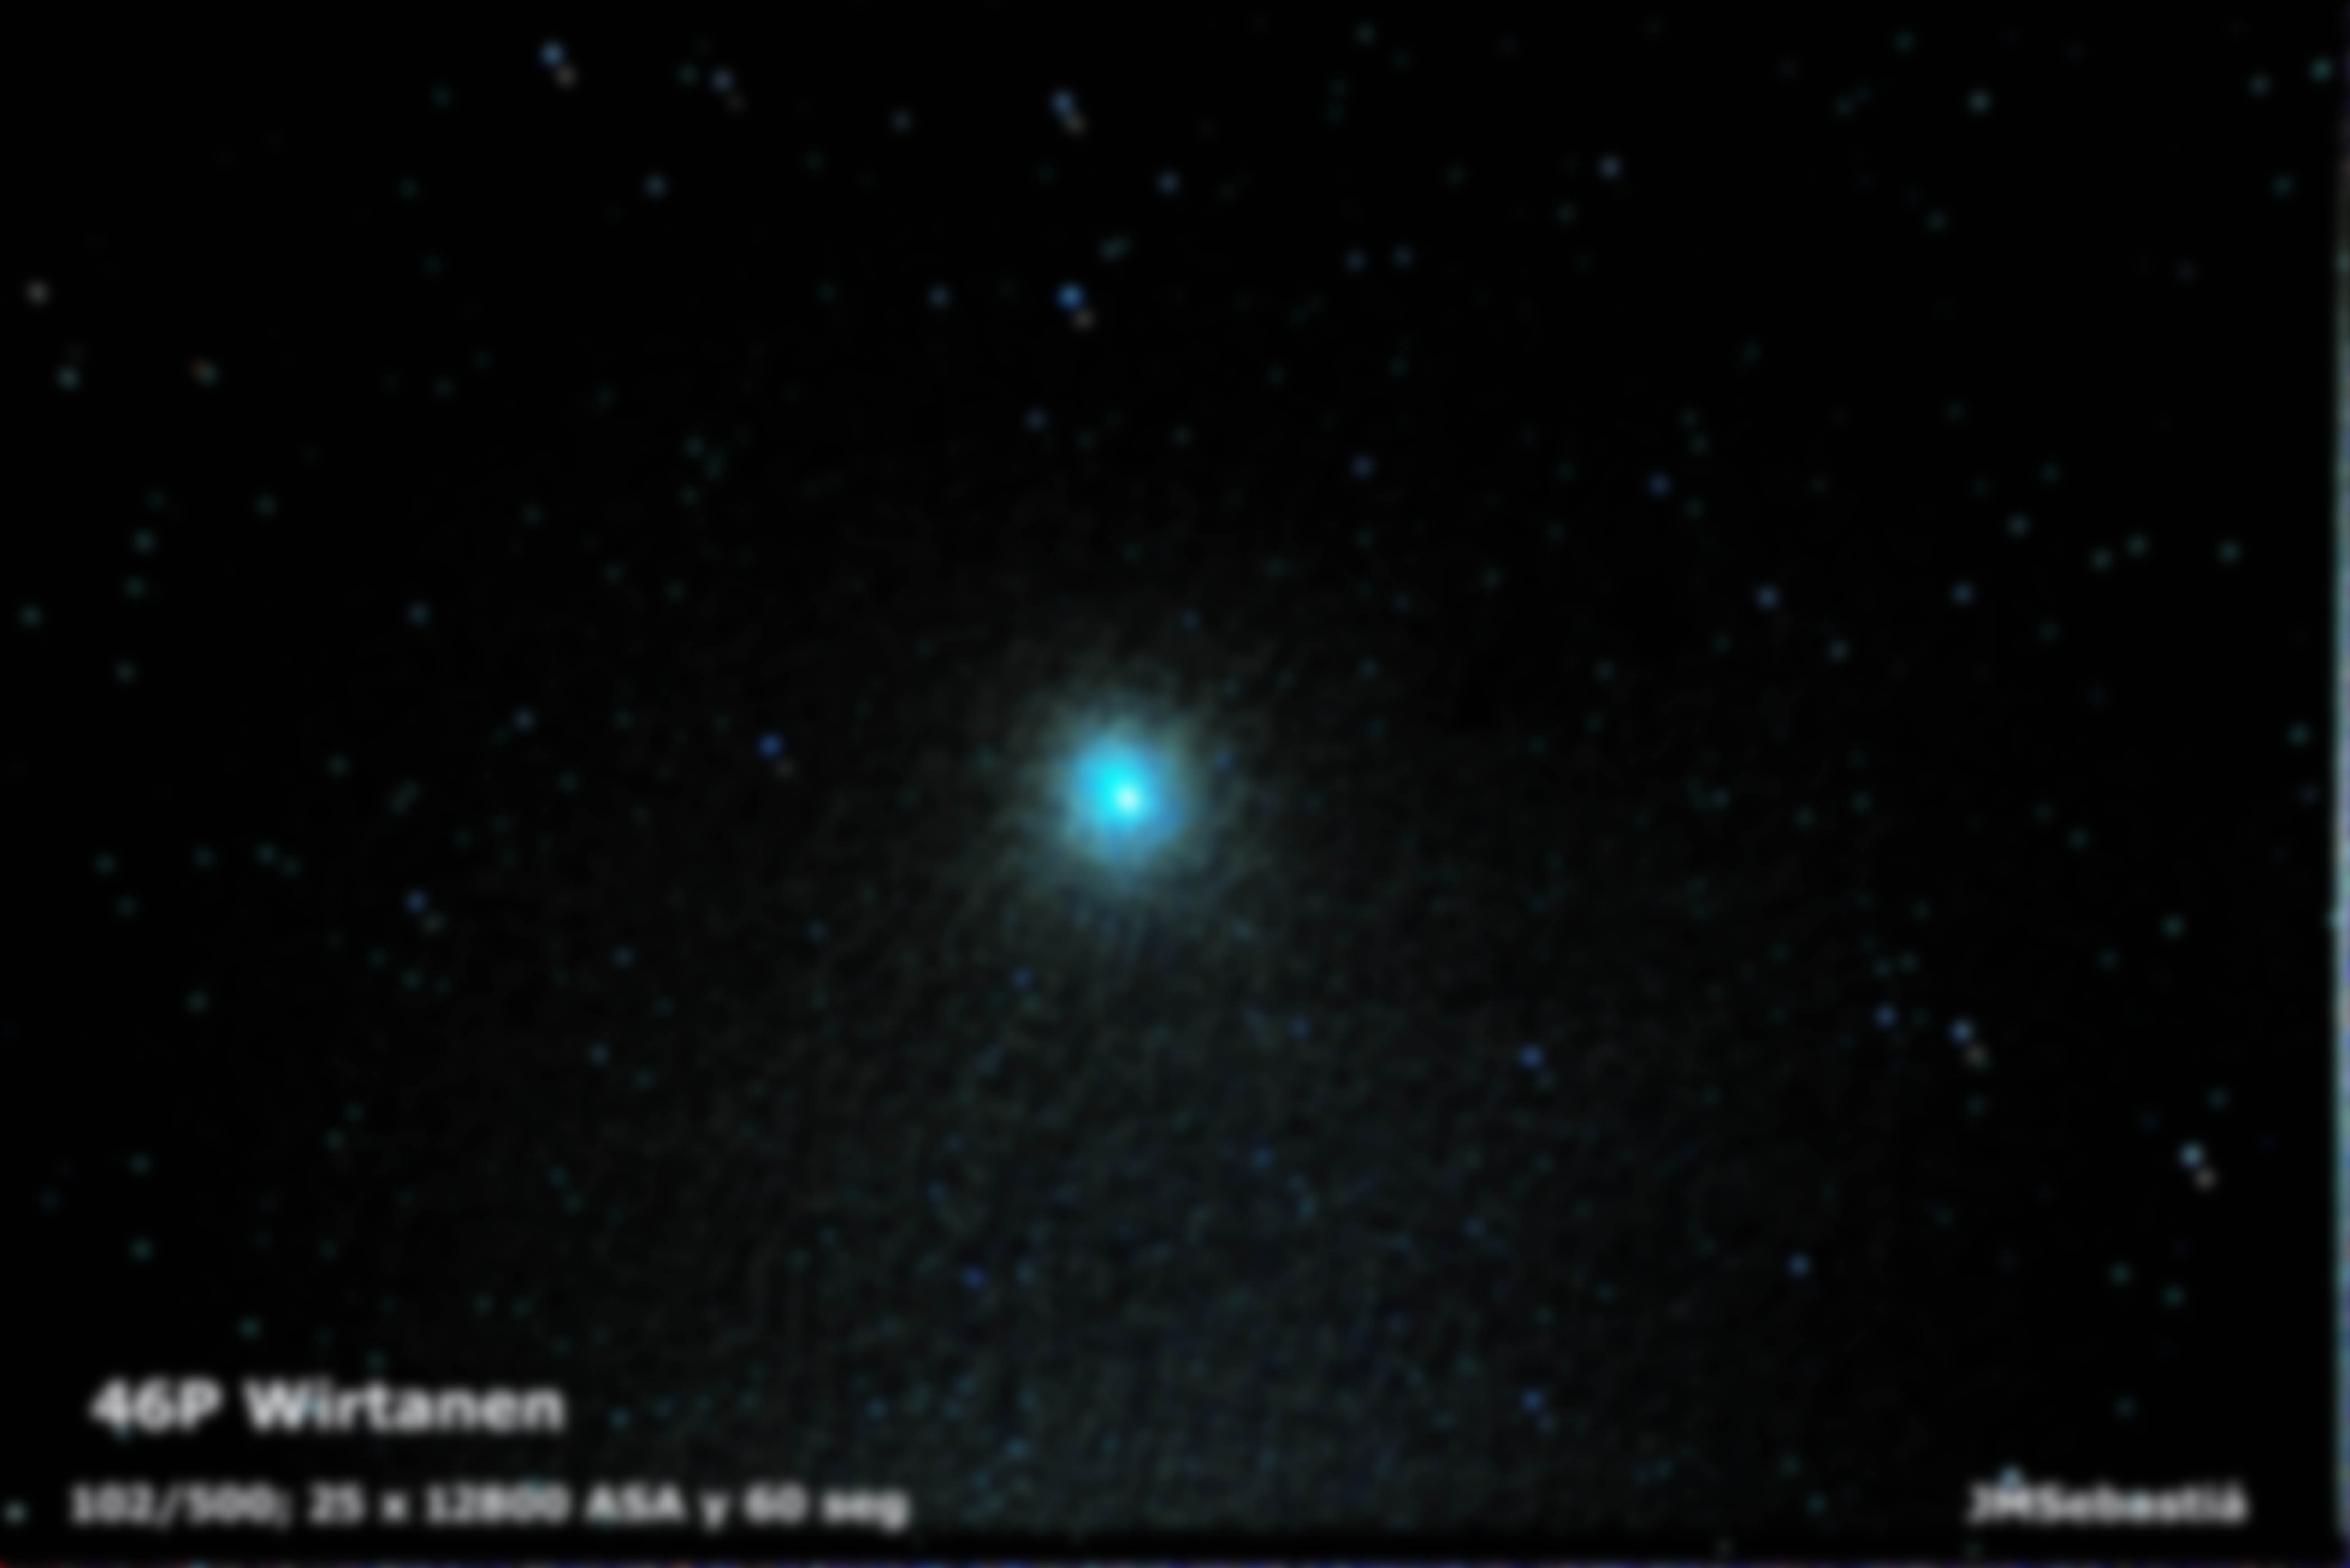 Cometa Wirtanen